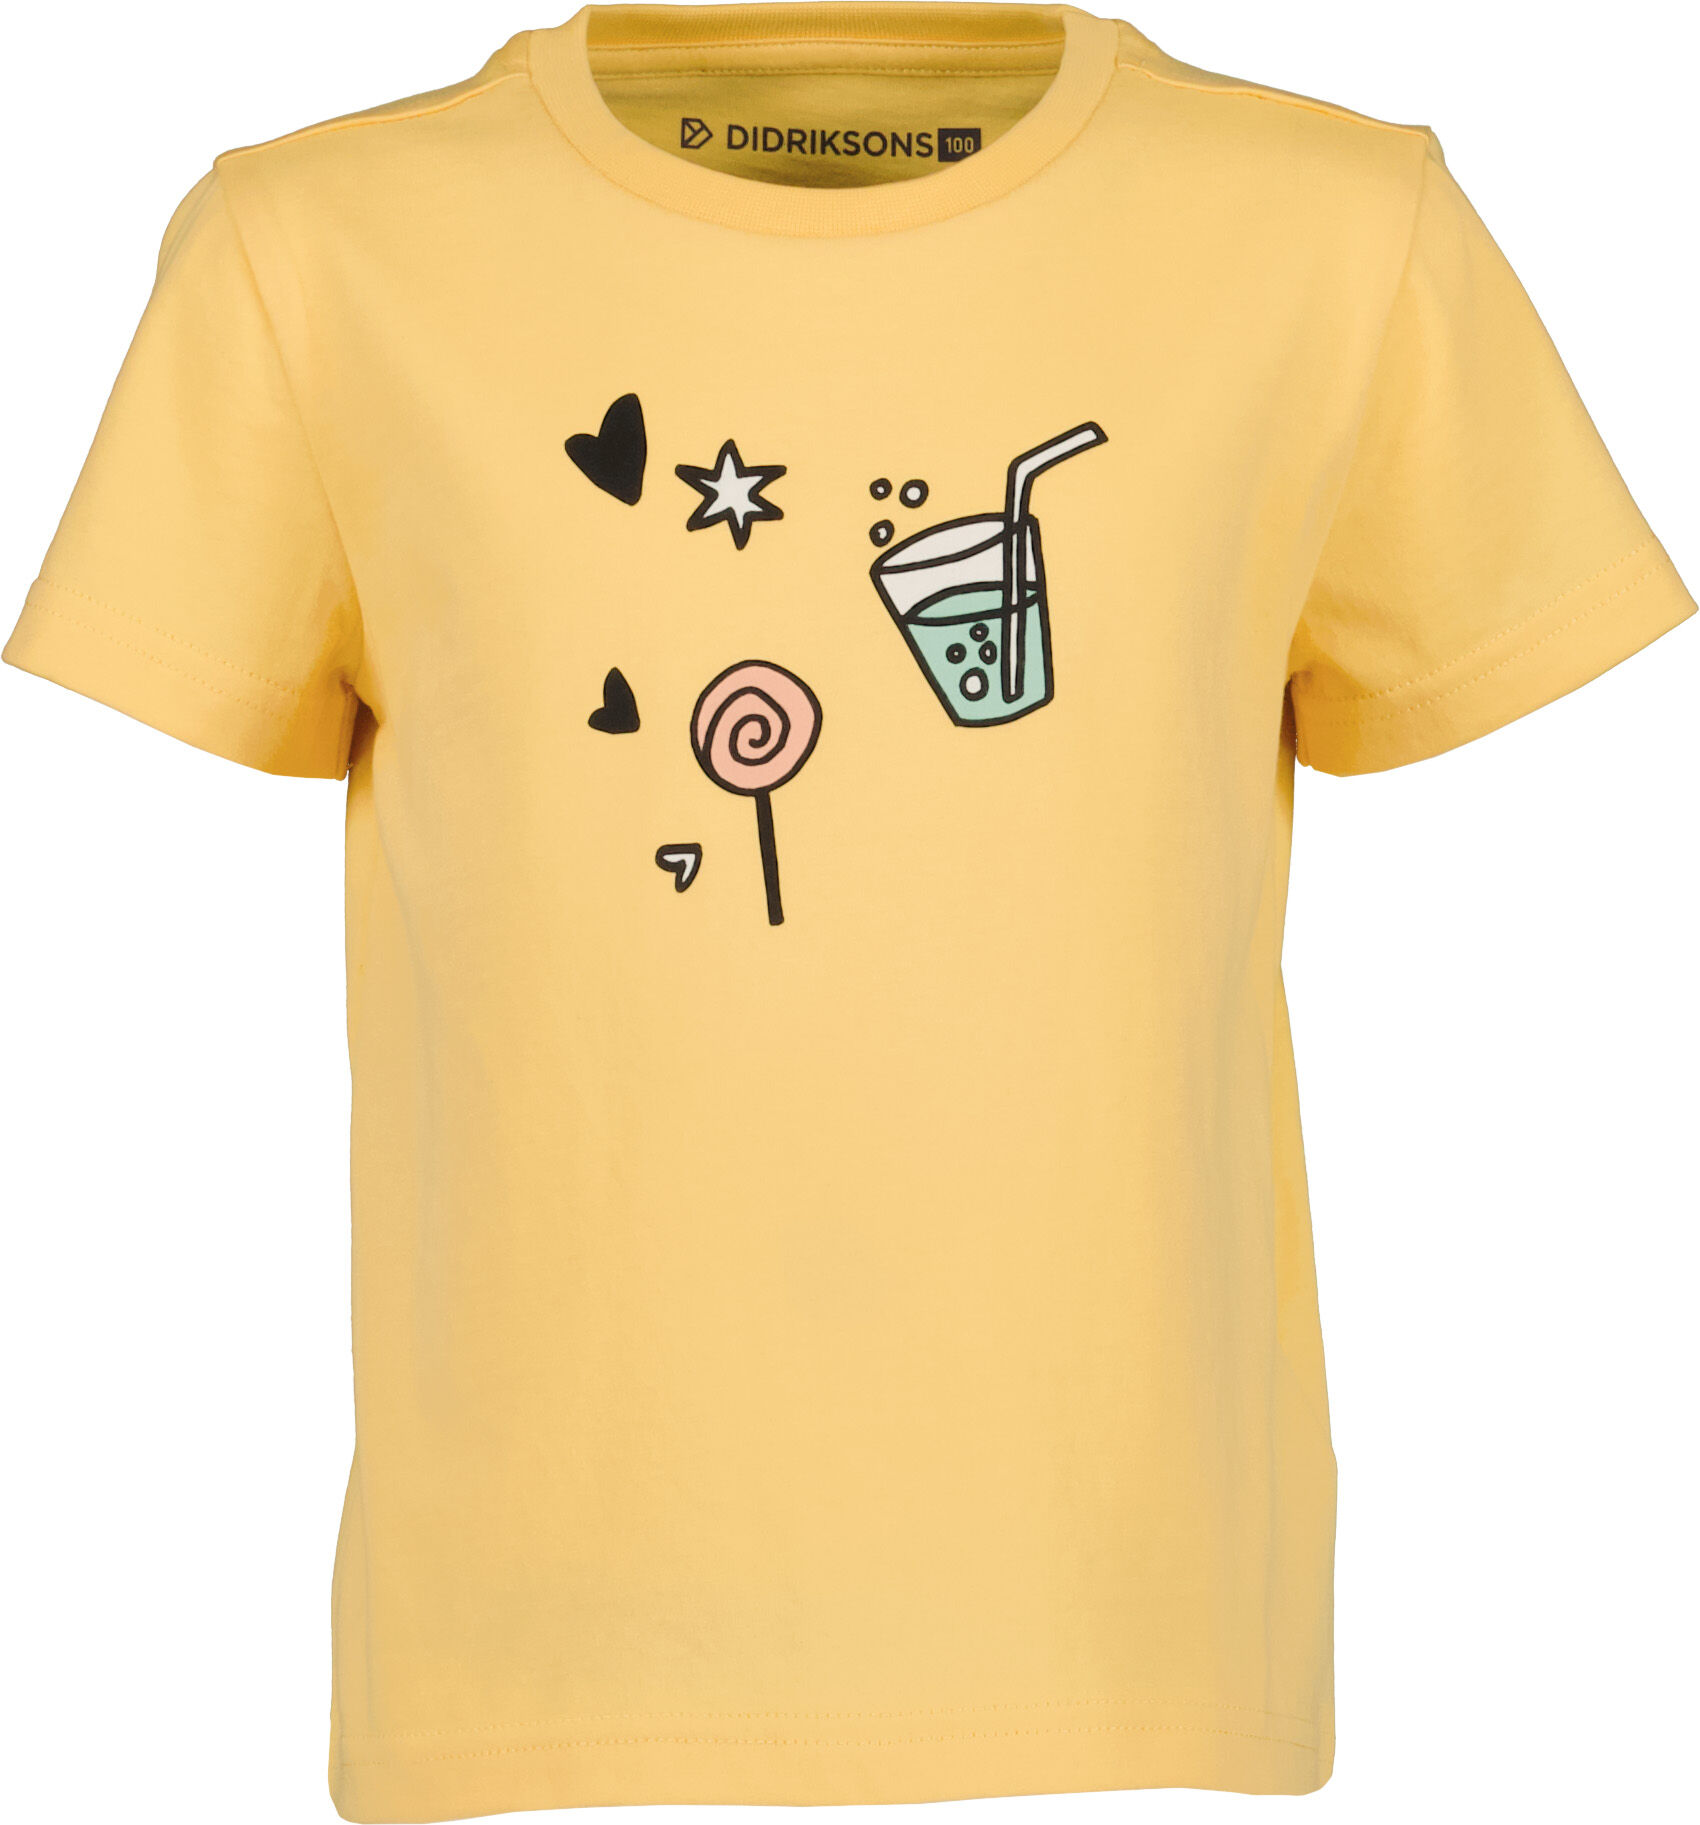 Didriksons Mynta T-shirt Creamy Yellow 90